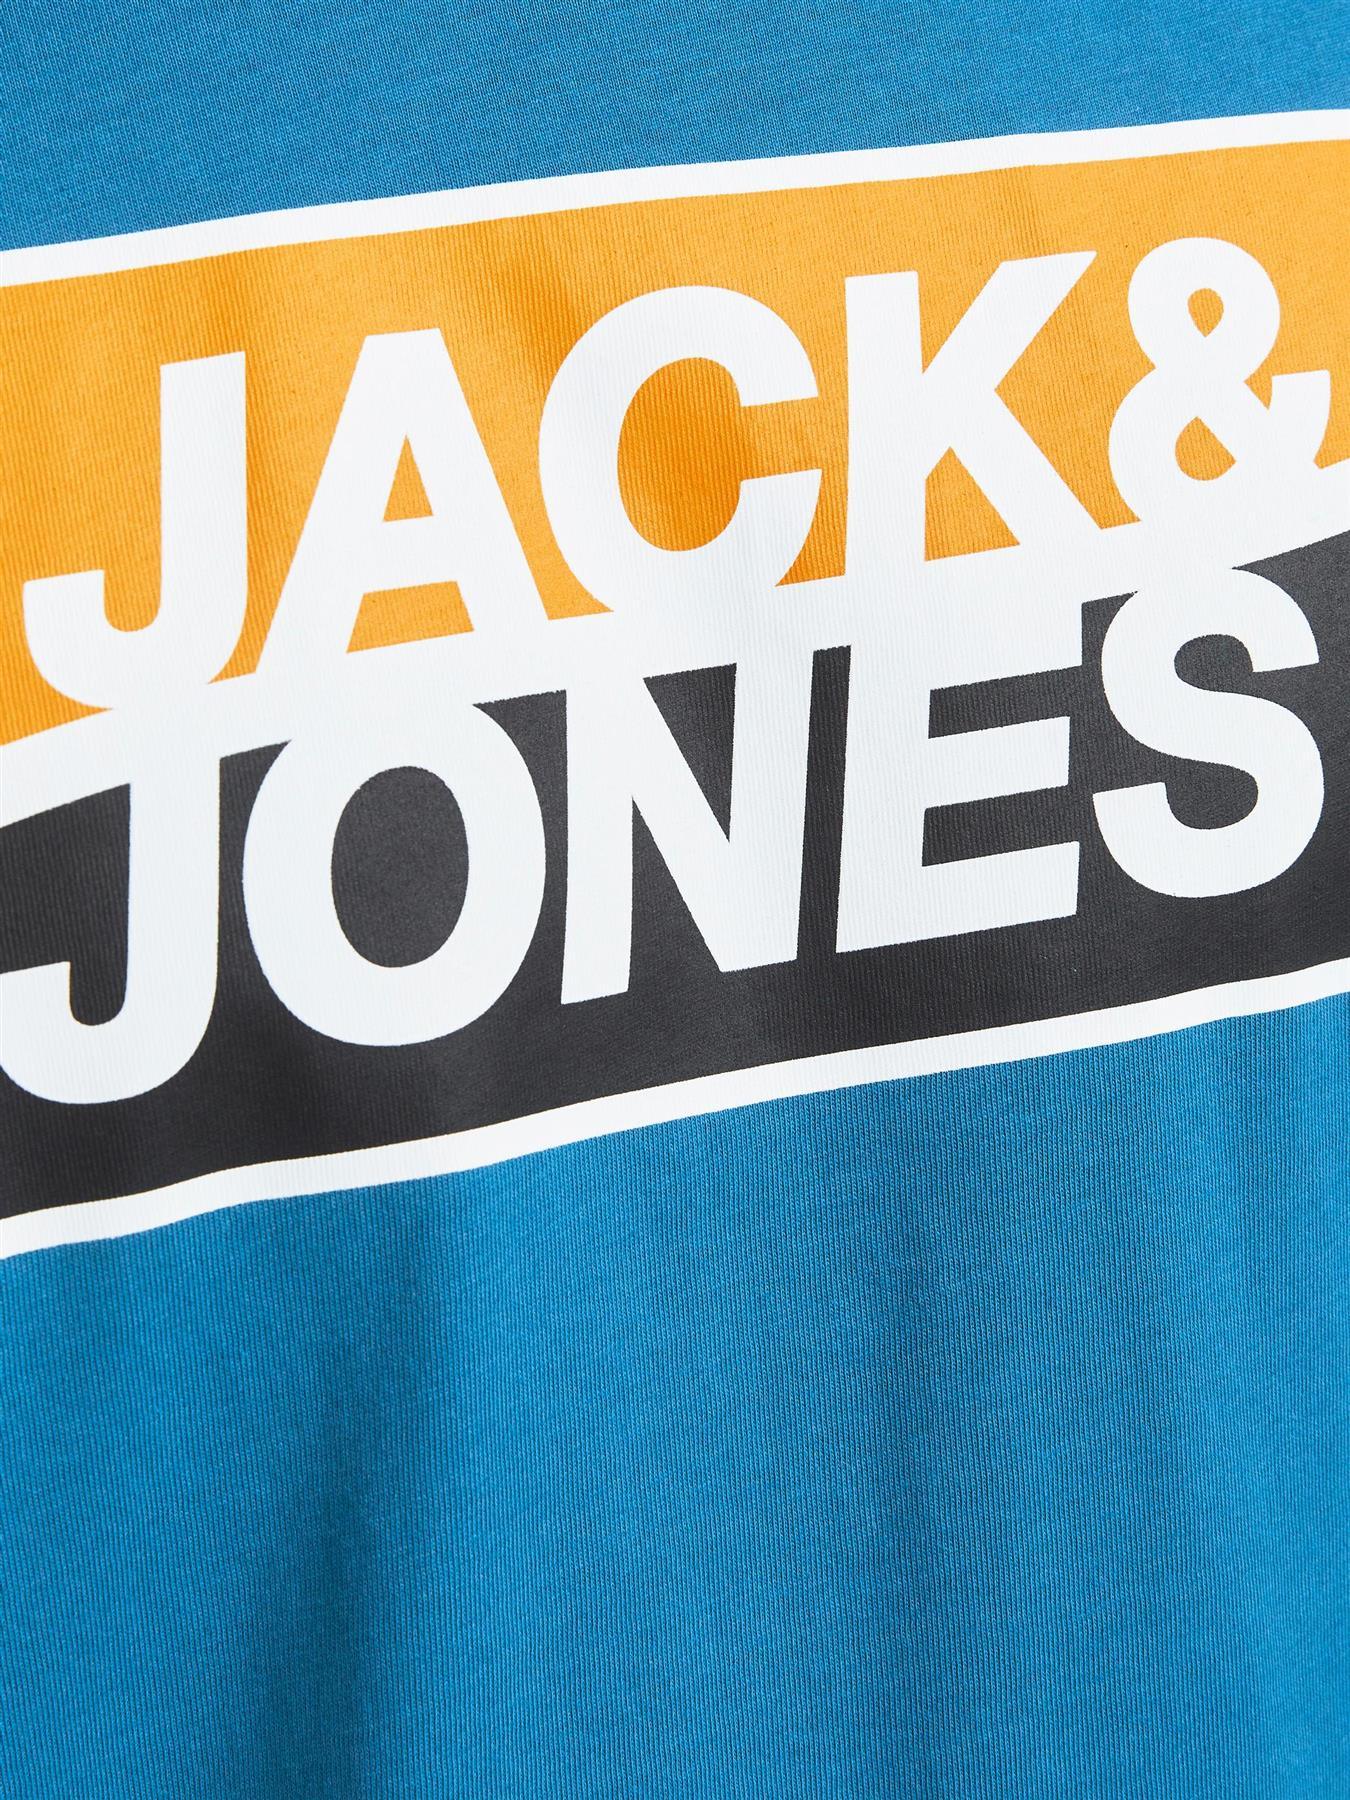 Jack & Jones Mens 'Fly' T-Shirt in Blue